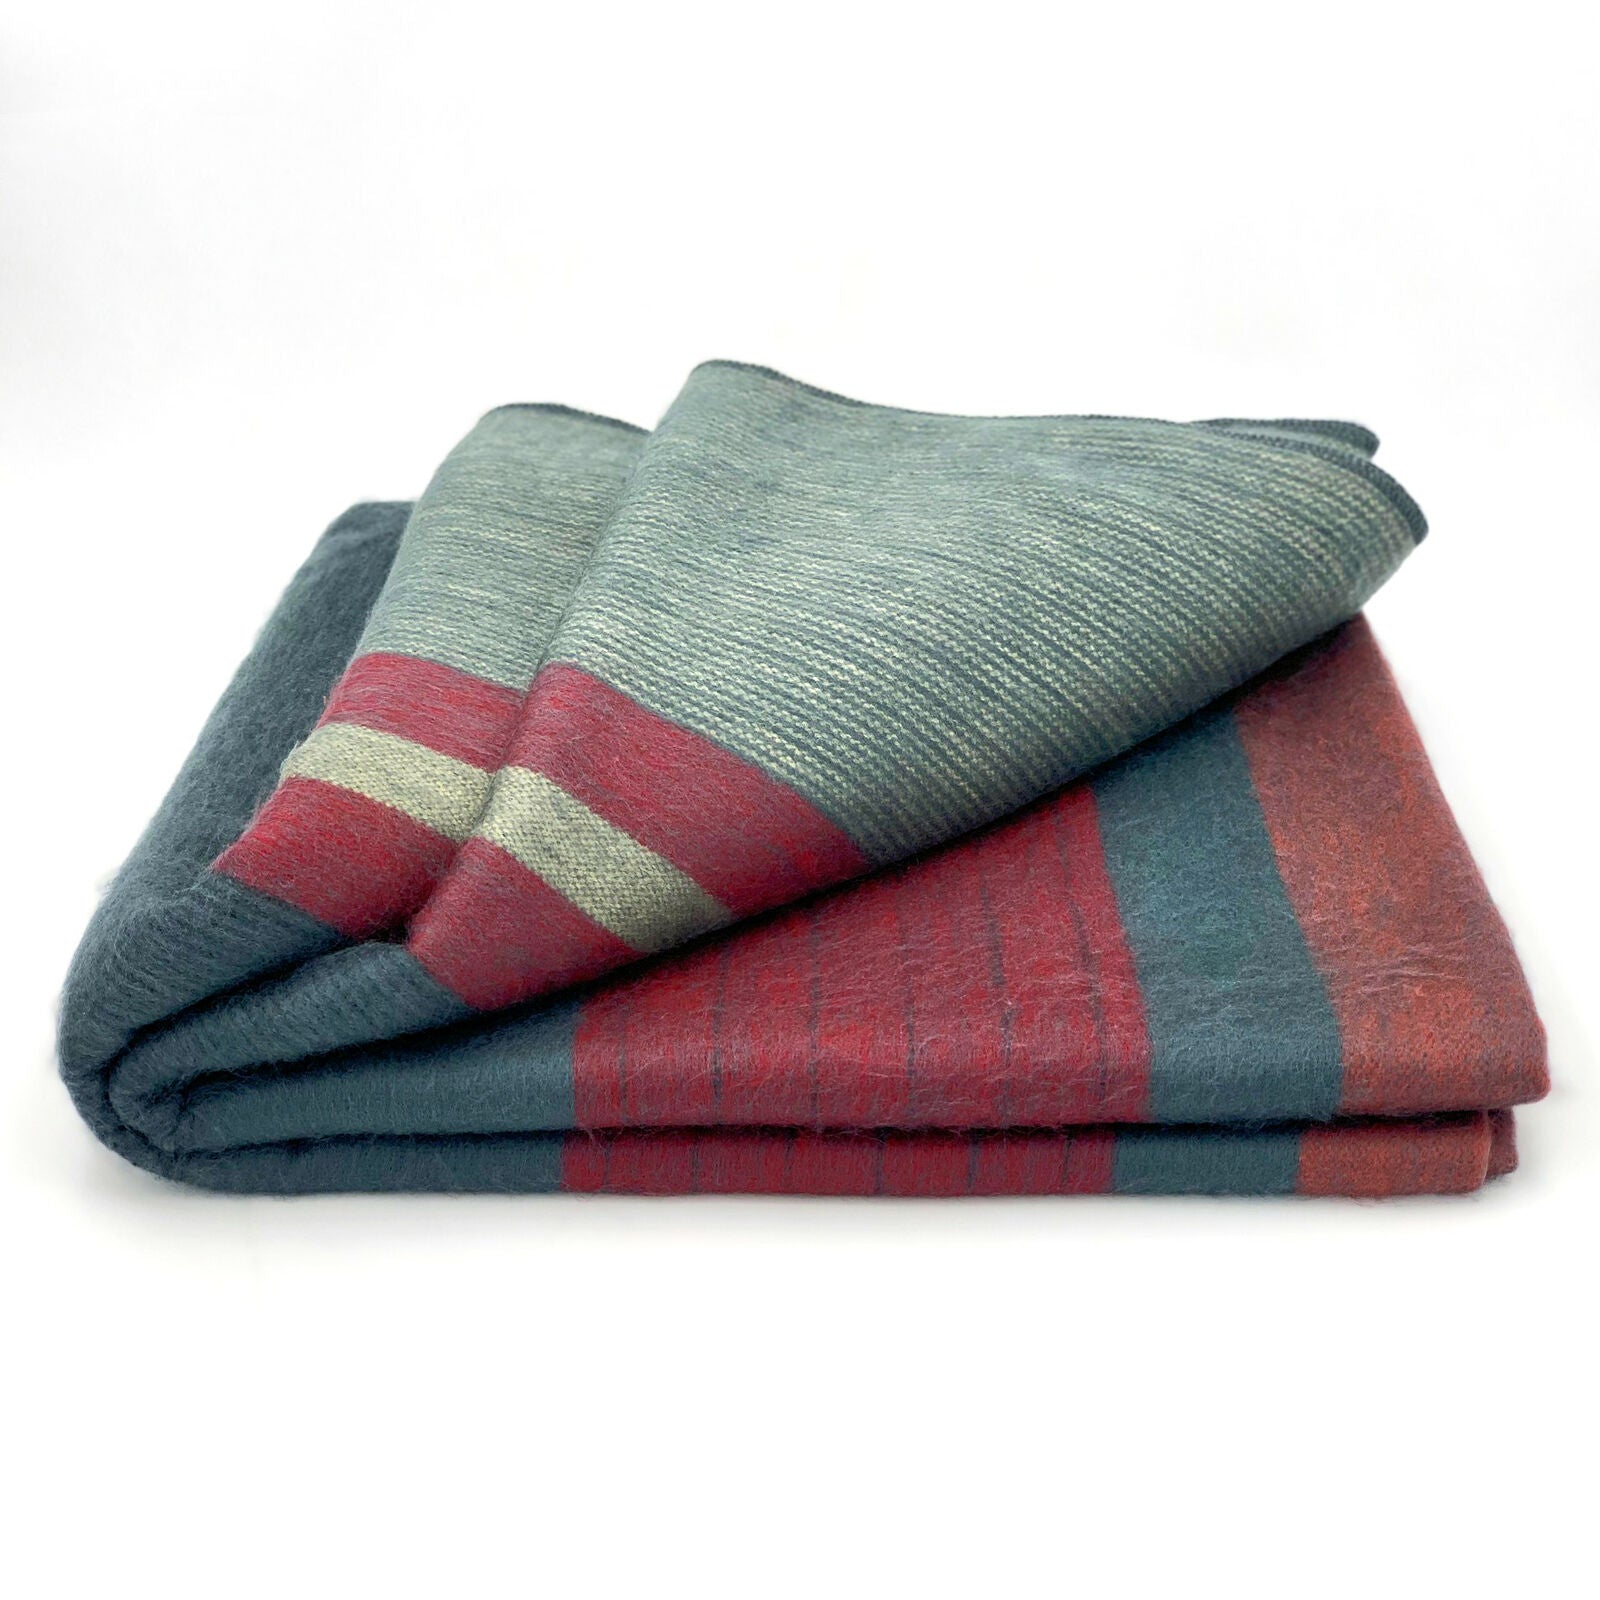 Atacazo - Baby Alpaca Wool Throw Blanket / Sofa Cover - Queen 98" x 67" - Carbon/Red